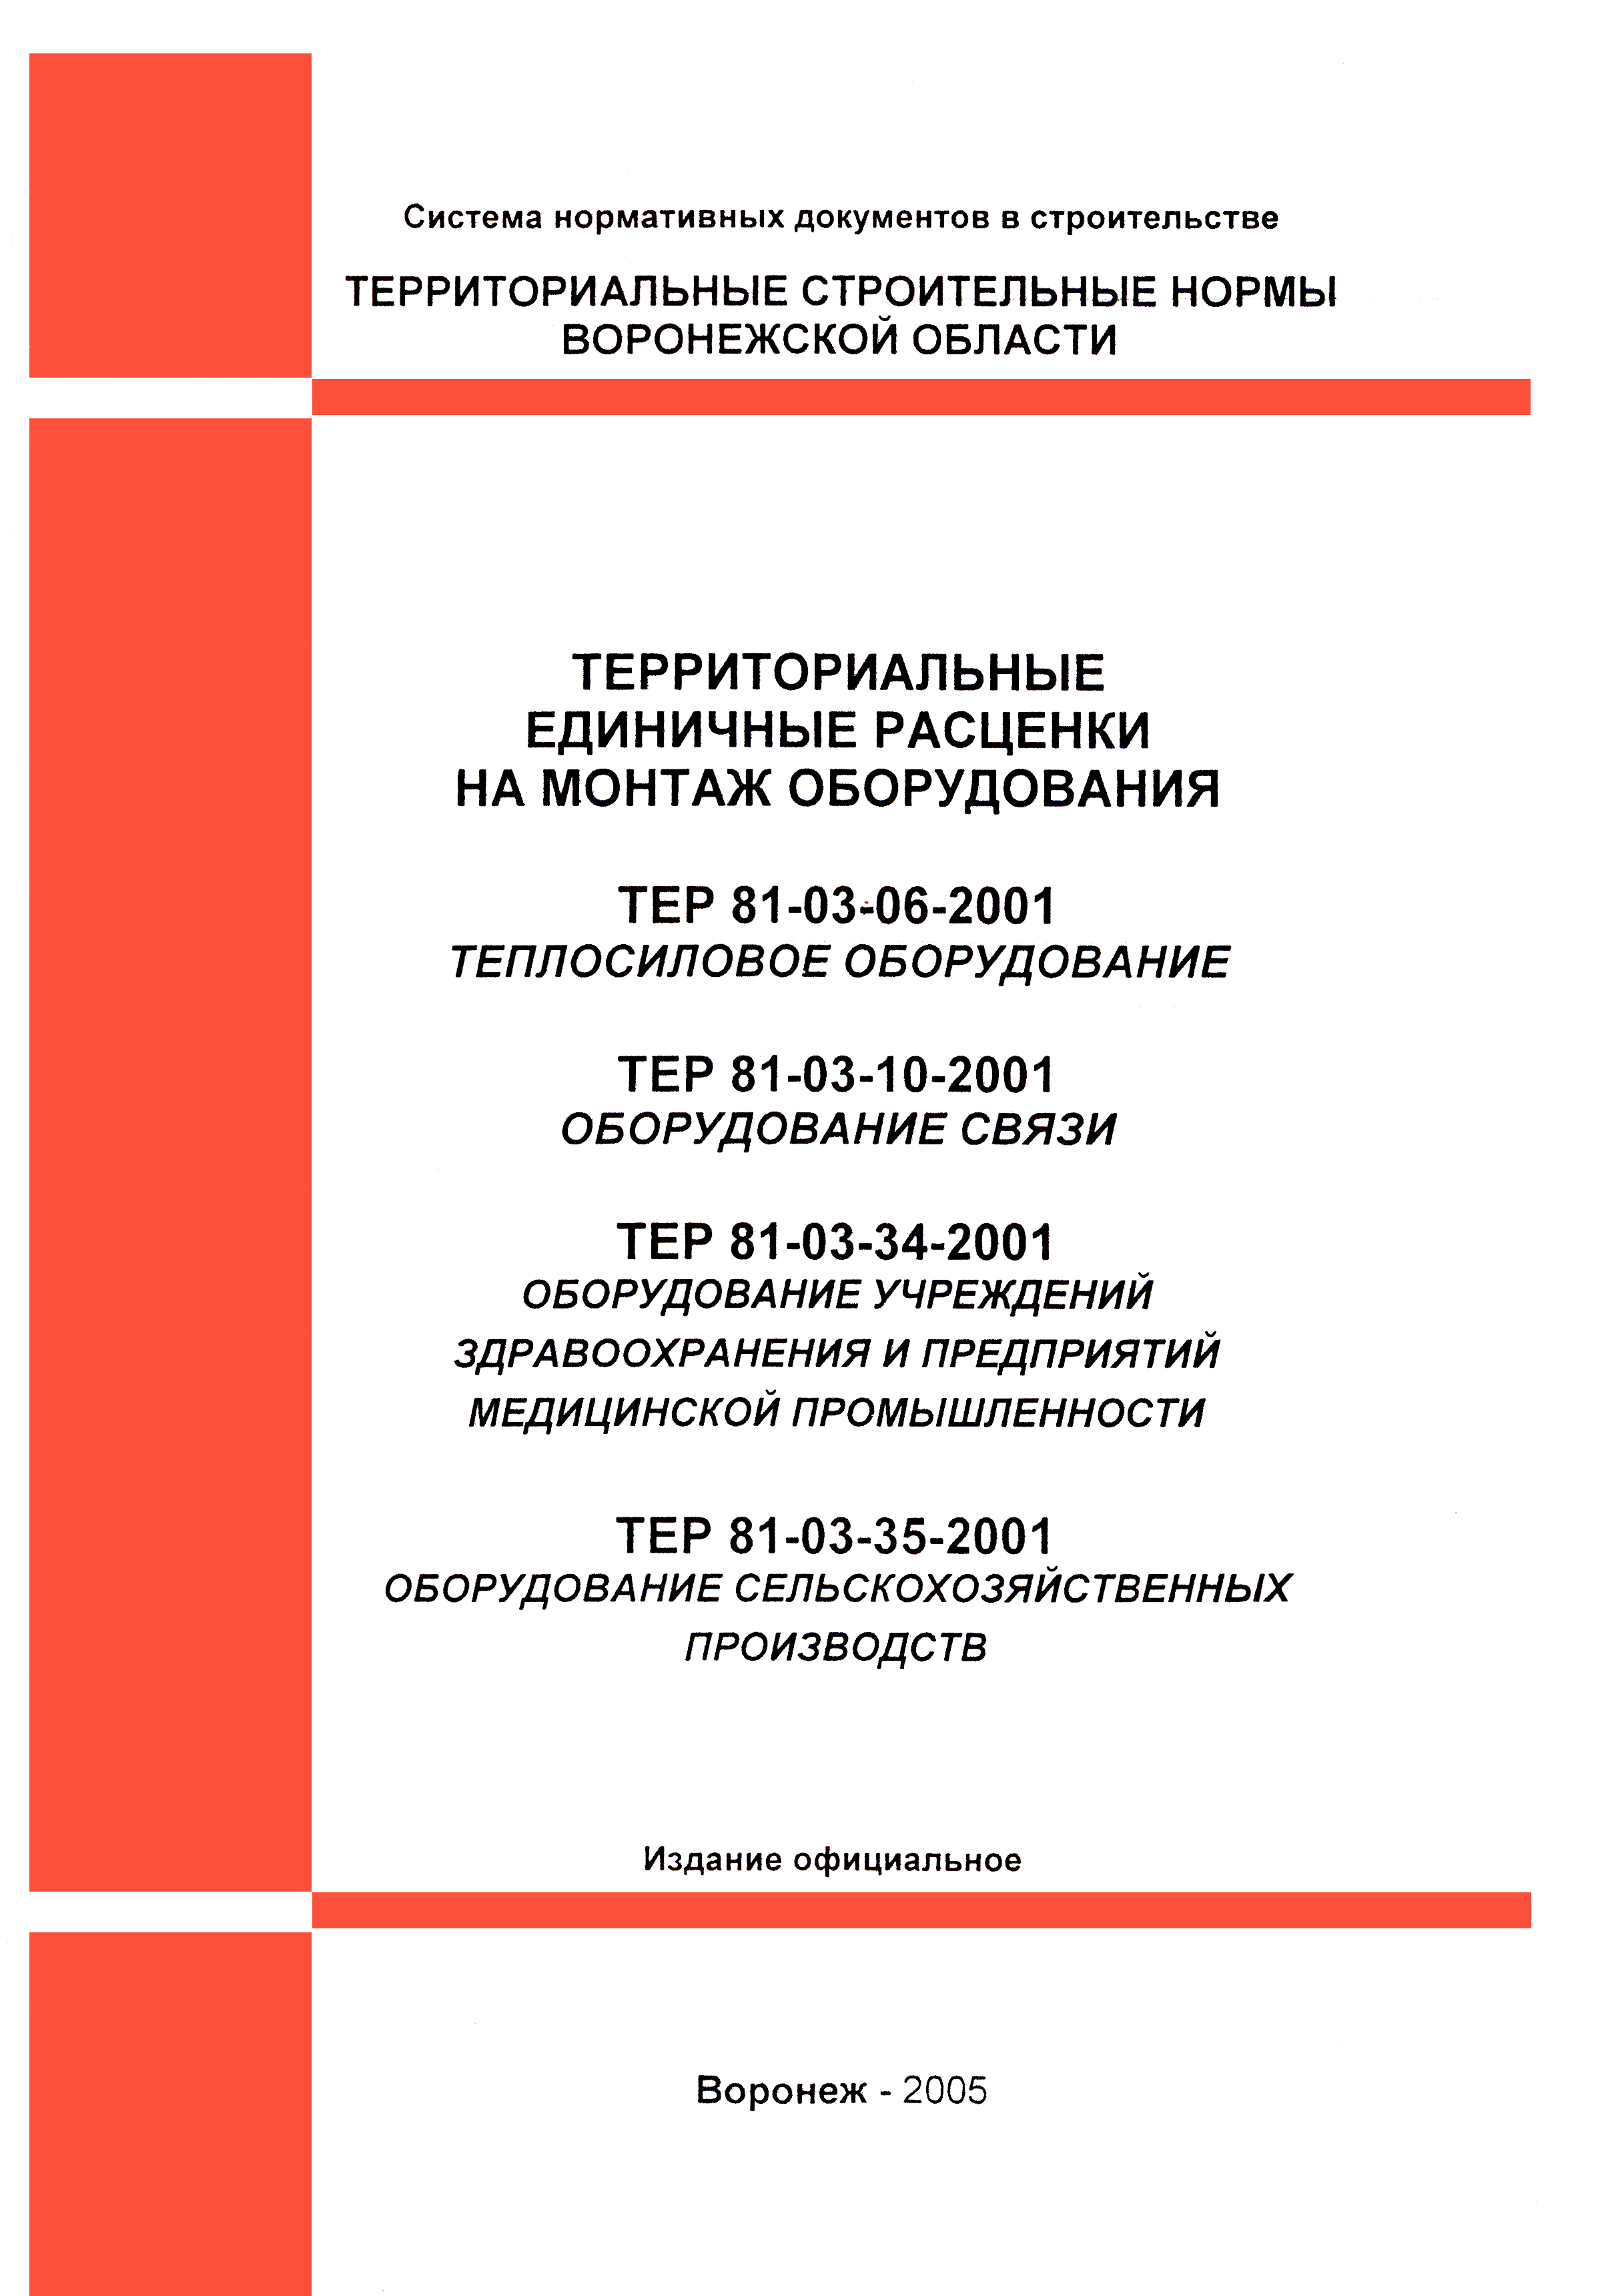 ТЕРм Воронежской области 81-03-34-2001